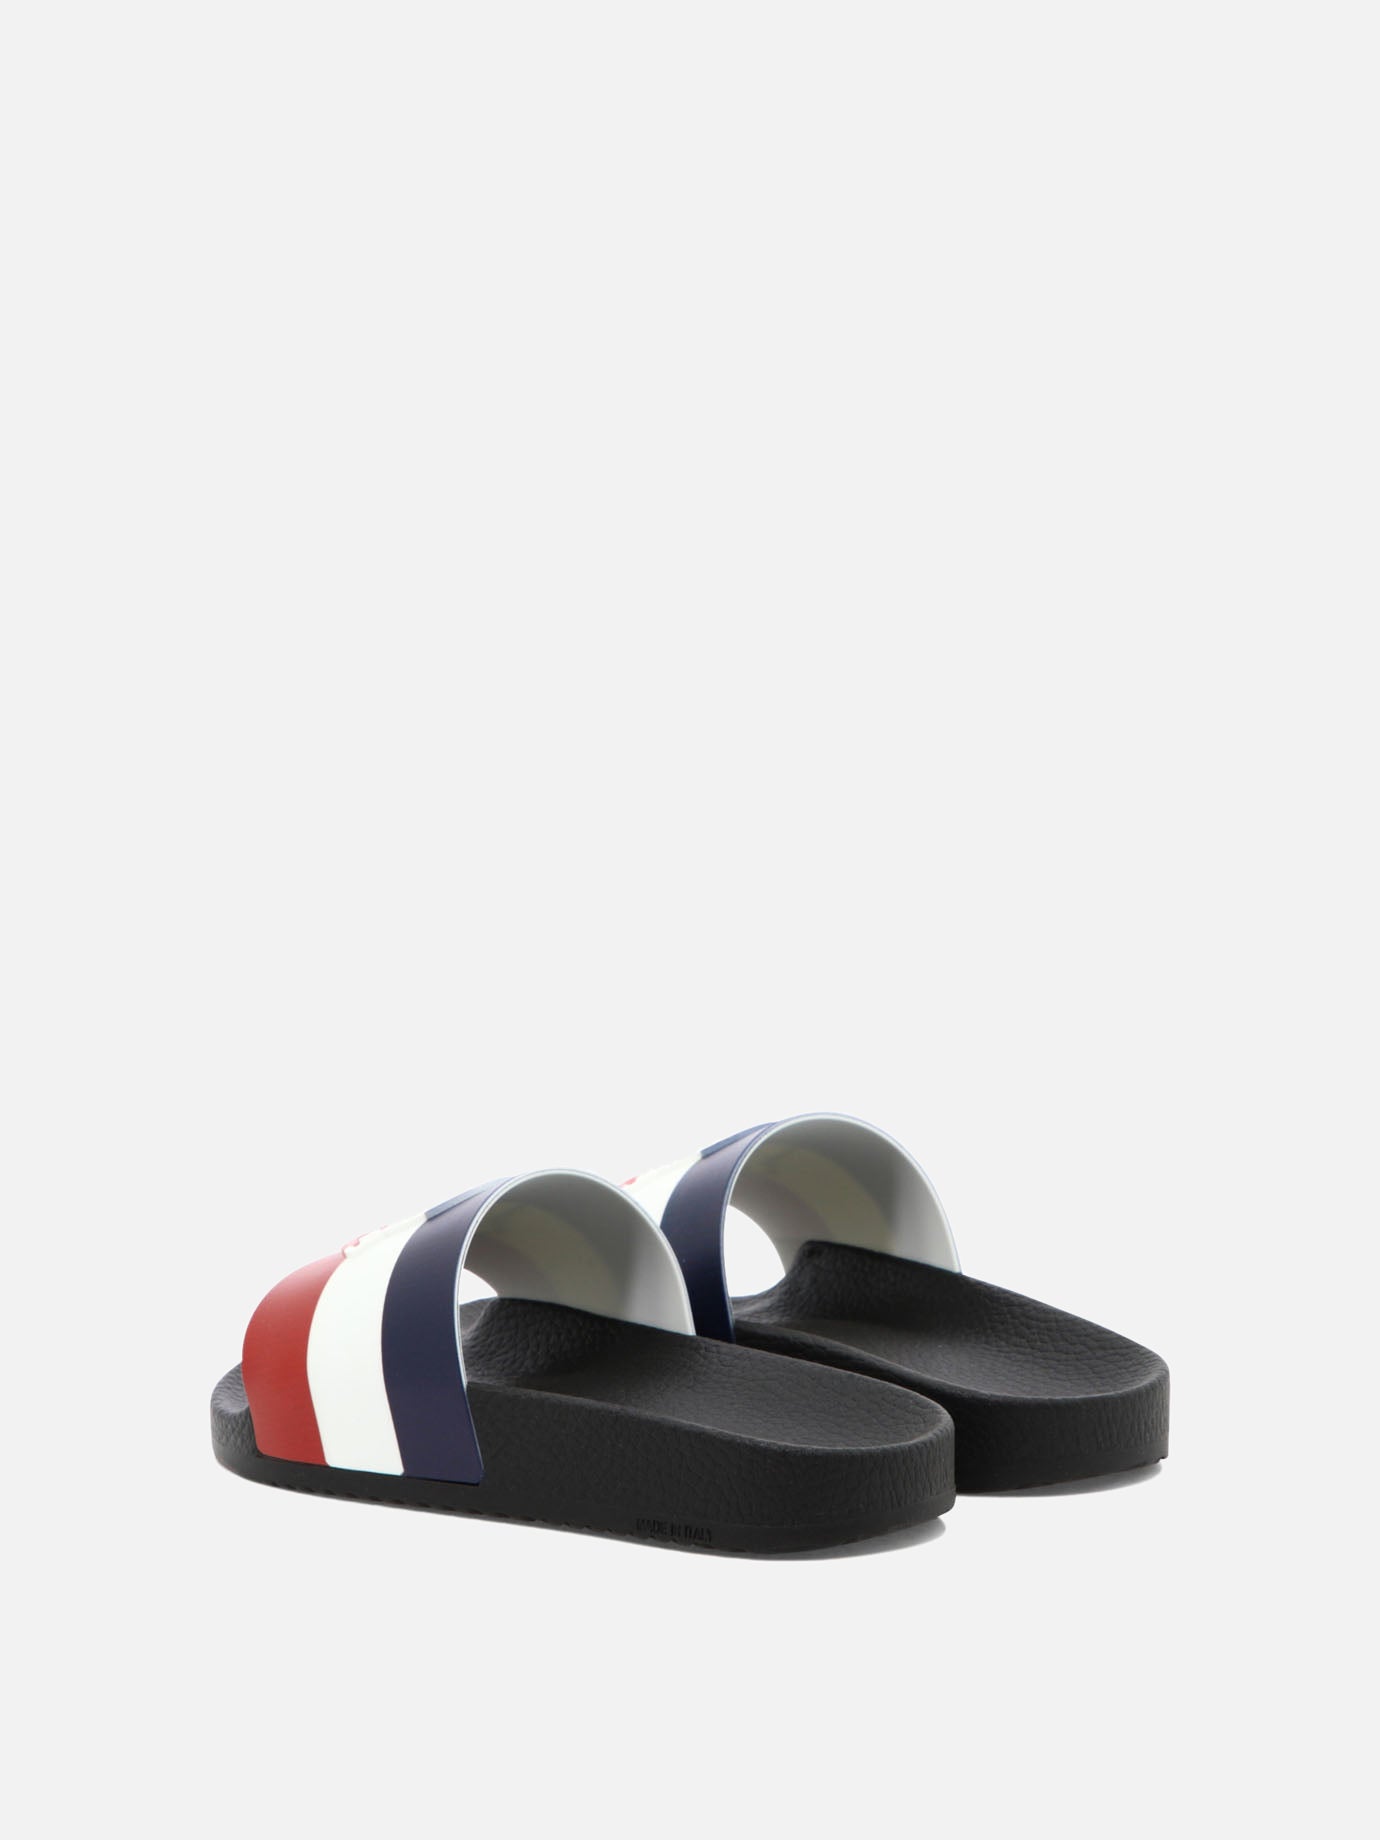 "Petit Basile" sandals